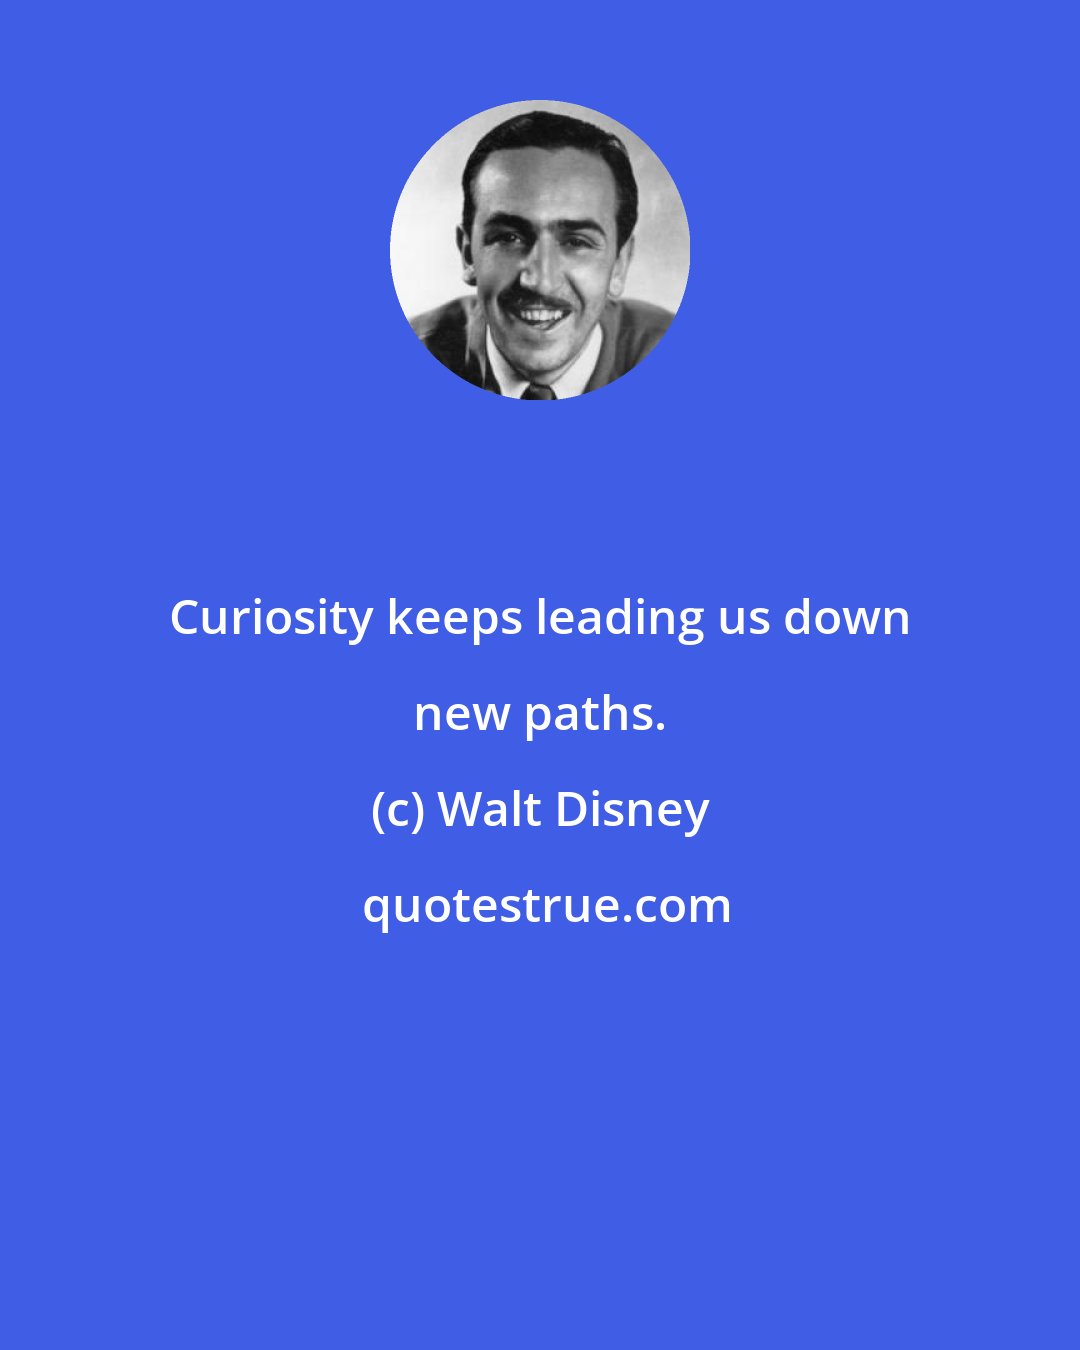 Walt Disney: Curiosity keeps leading us down new paths.